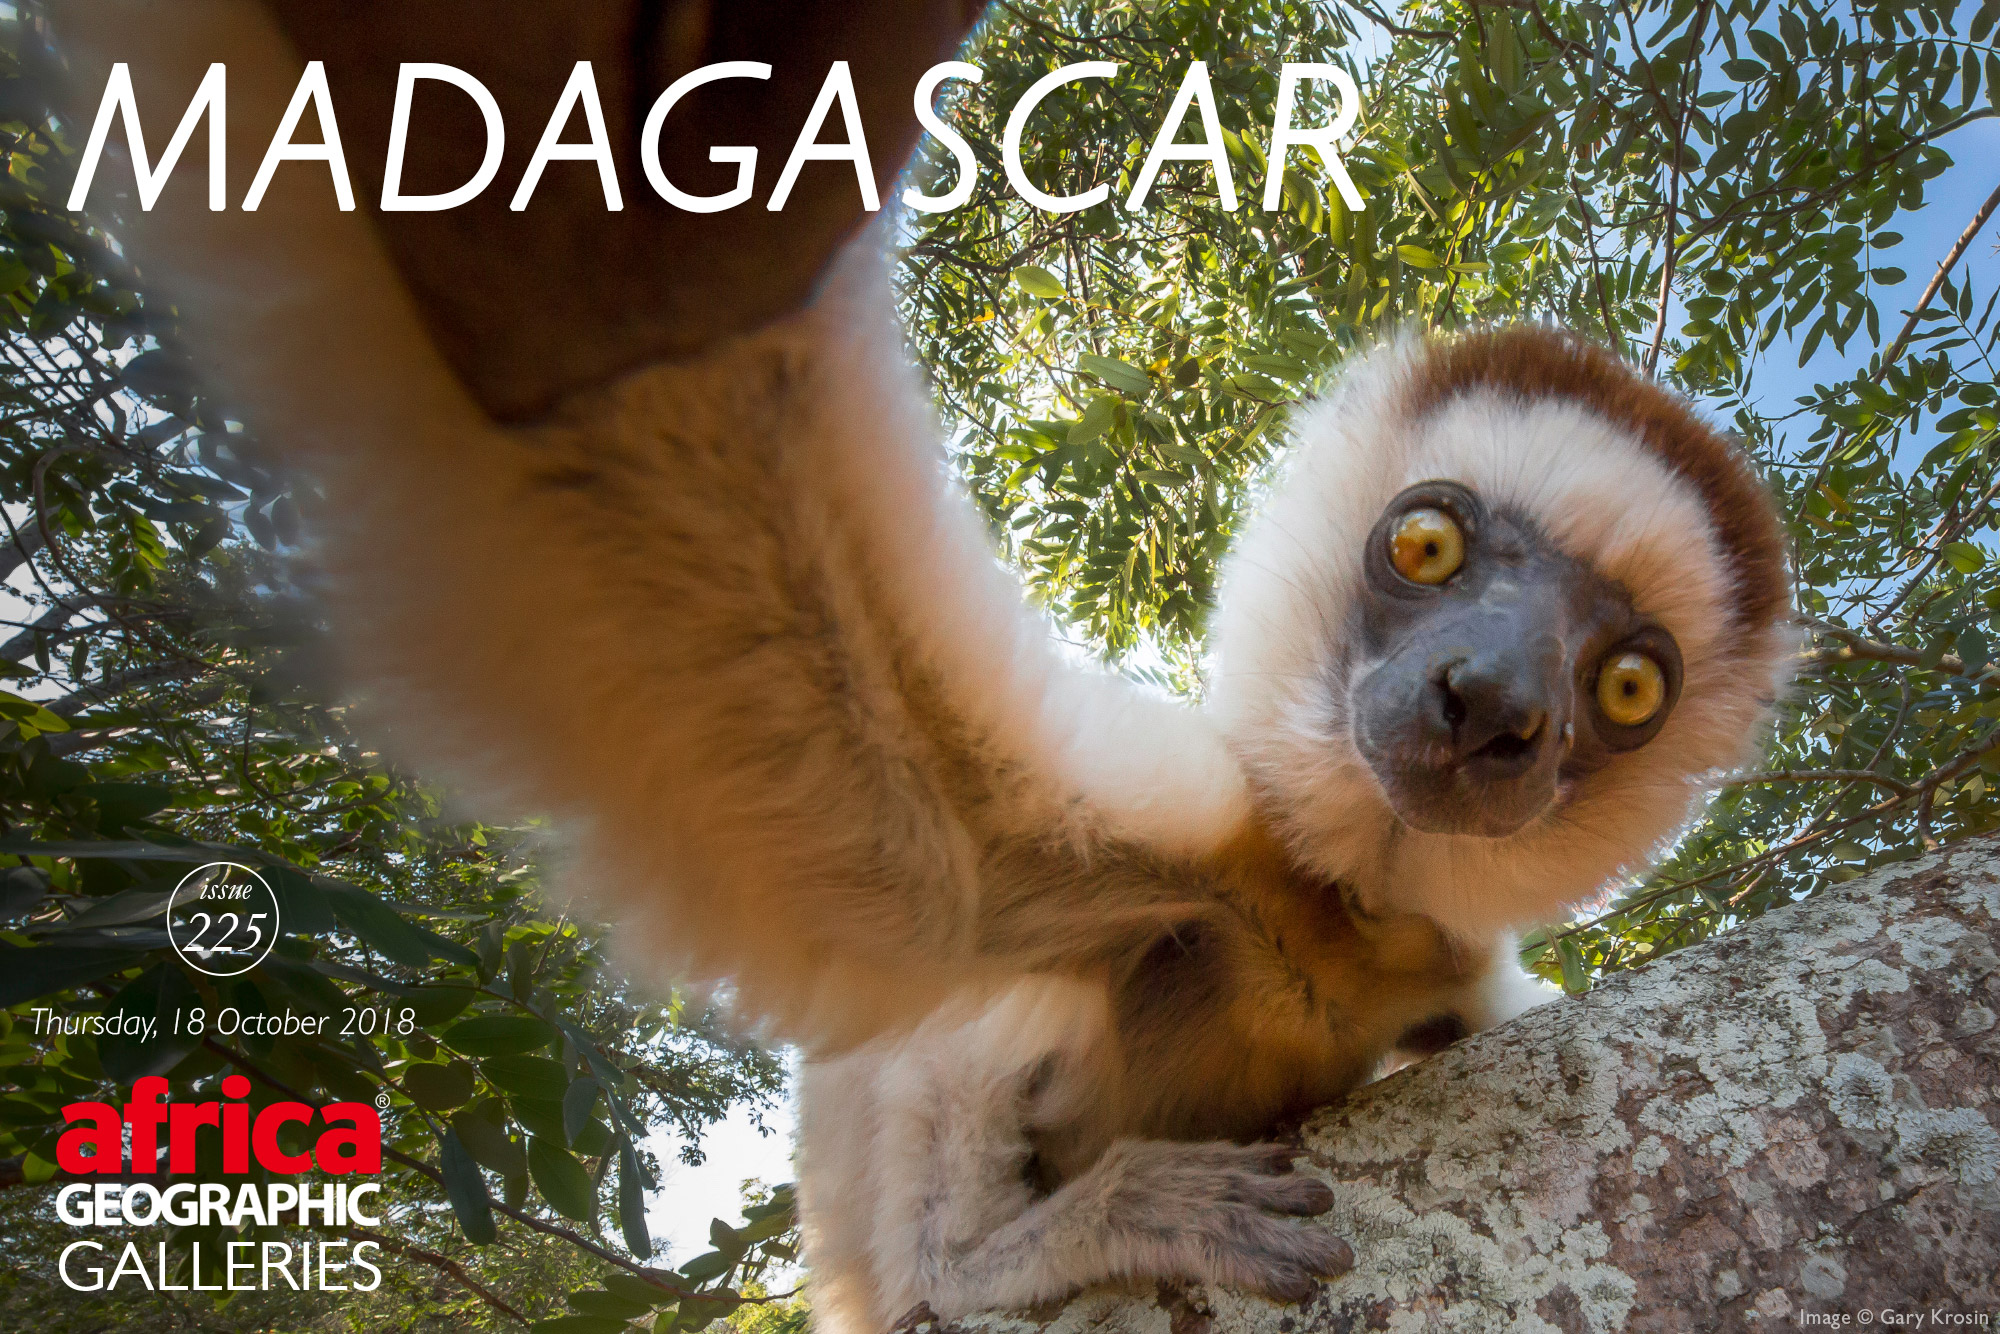 Madagascar - Africa Geographic